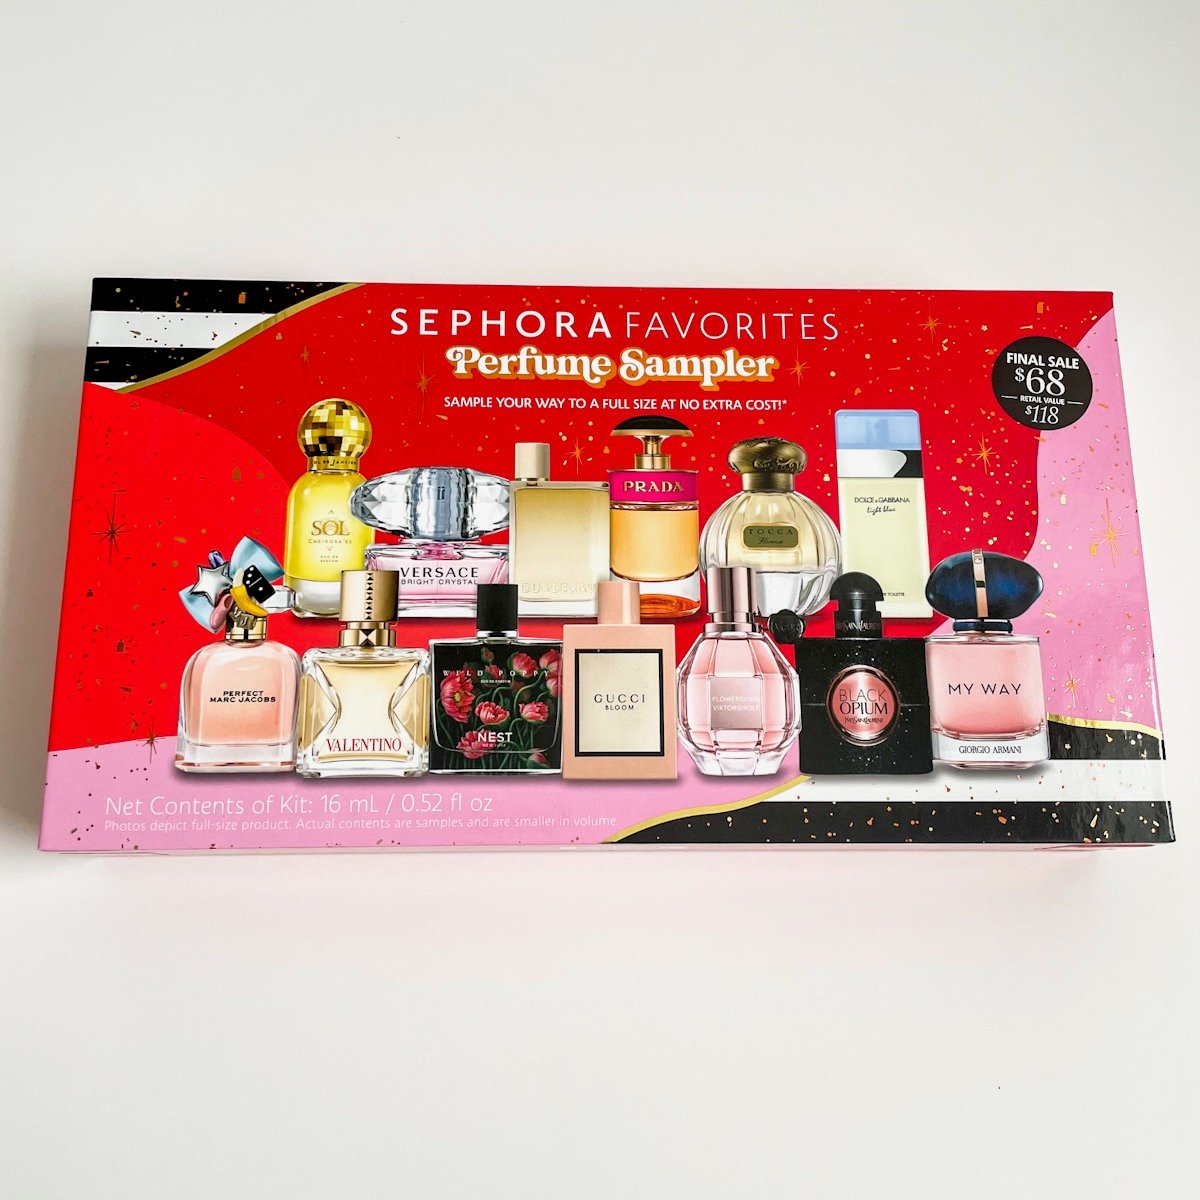 Sephora Favorites Bestsellers Perfume Sampler Set Review MSA